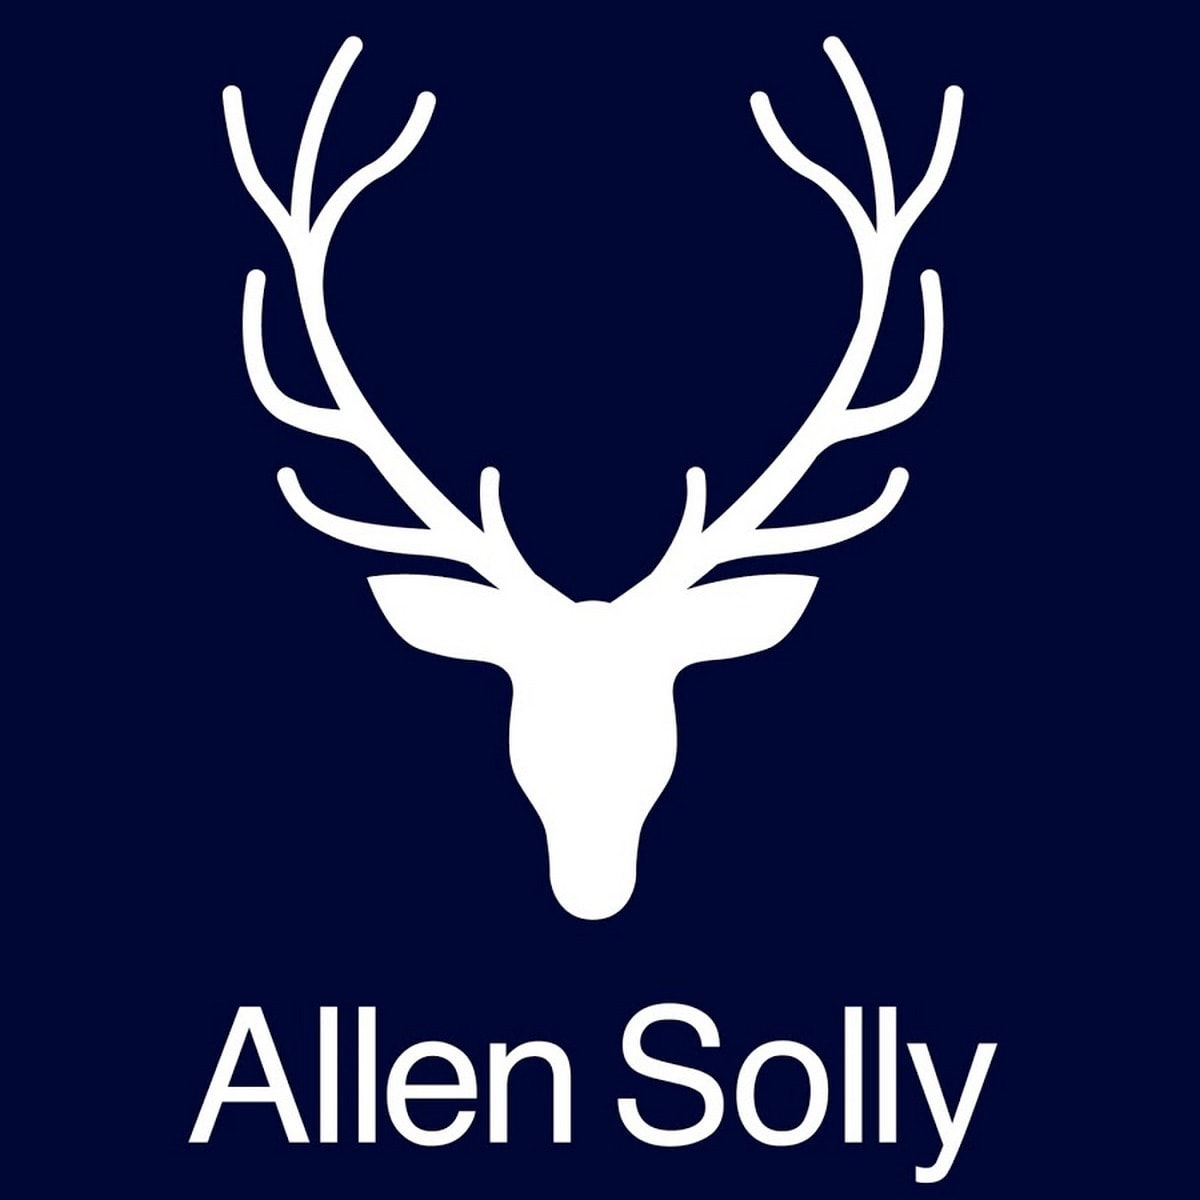 Marketing Mix of Allen Solly - Allen Solly Marketing Mix